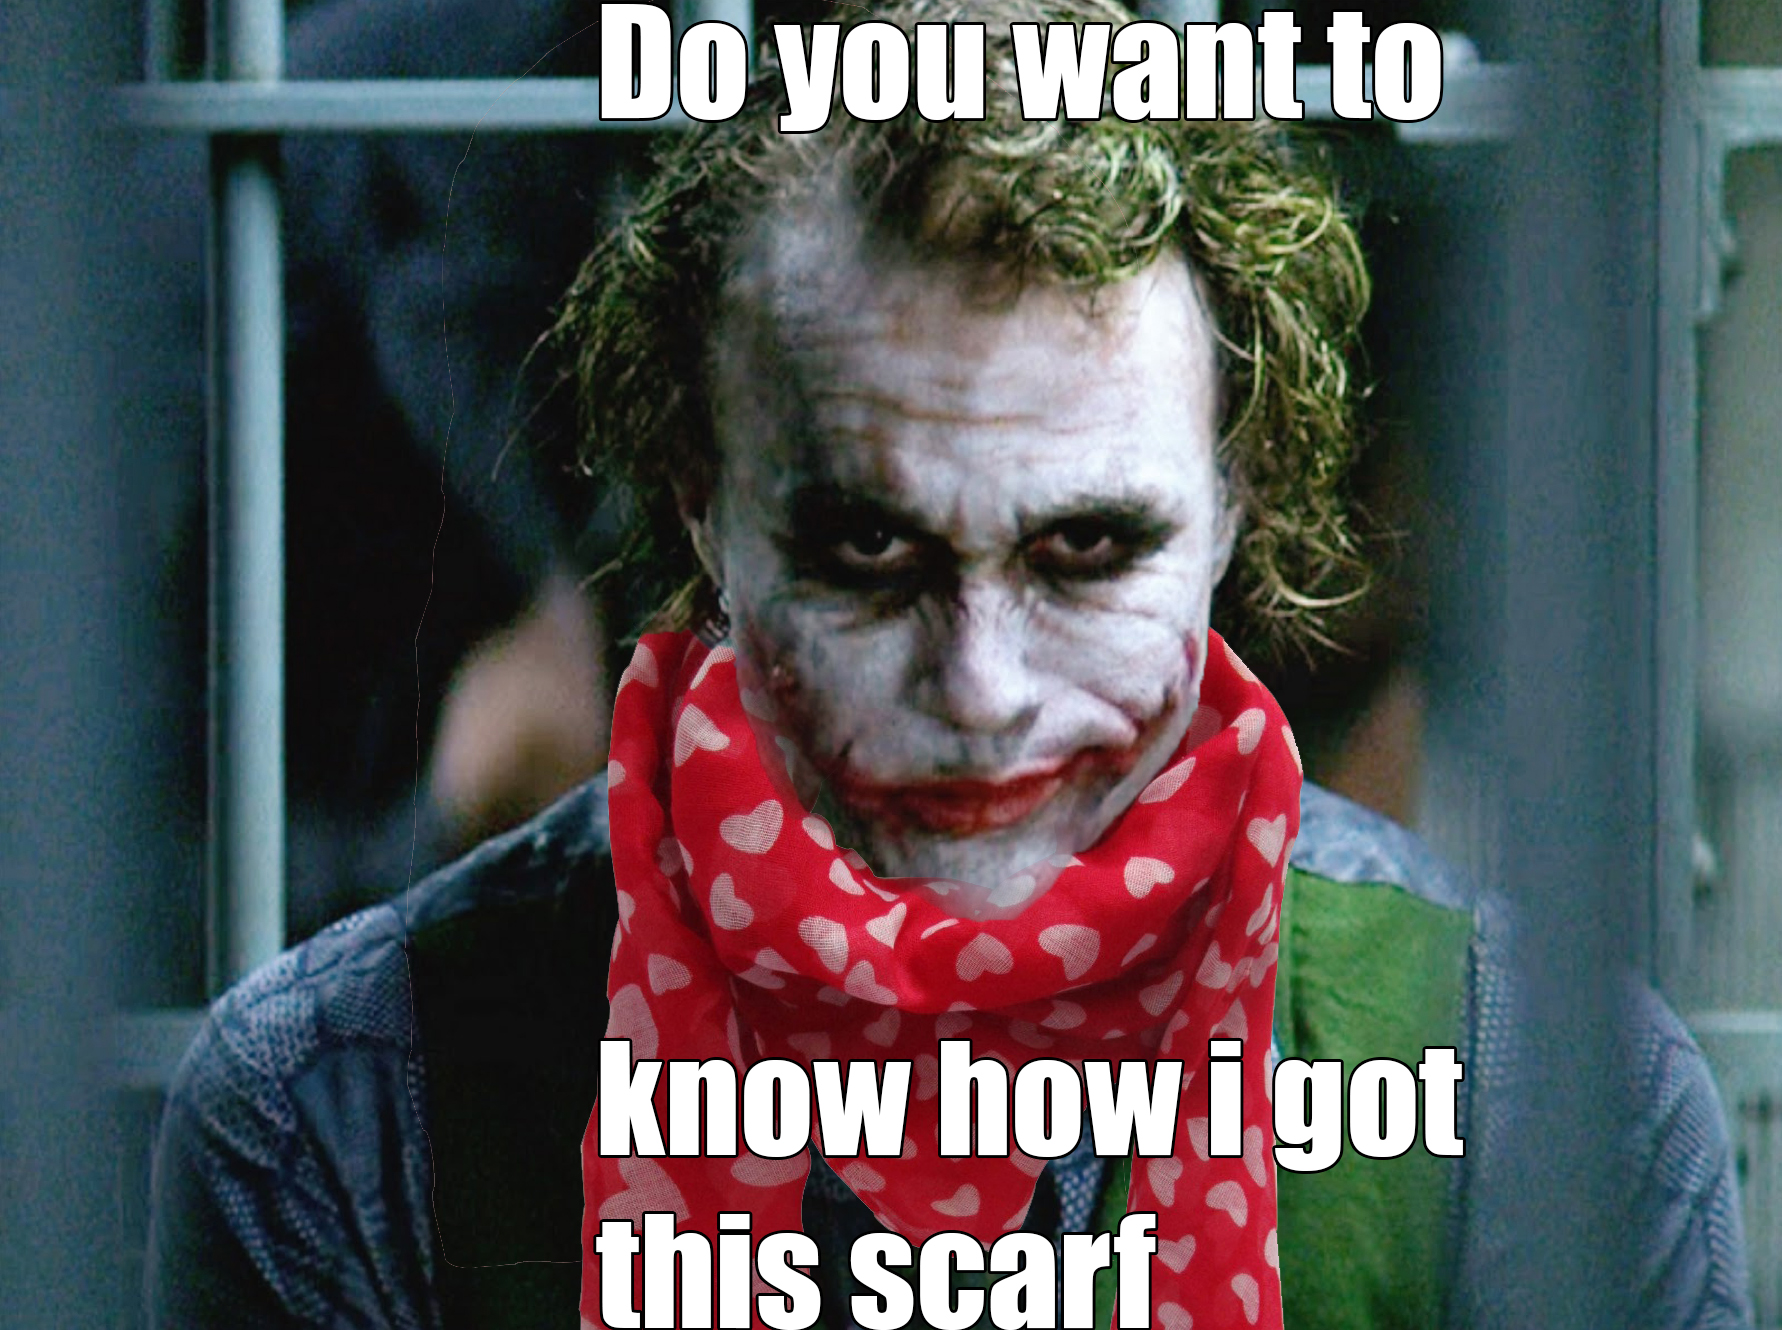 Jokers scarf addiction